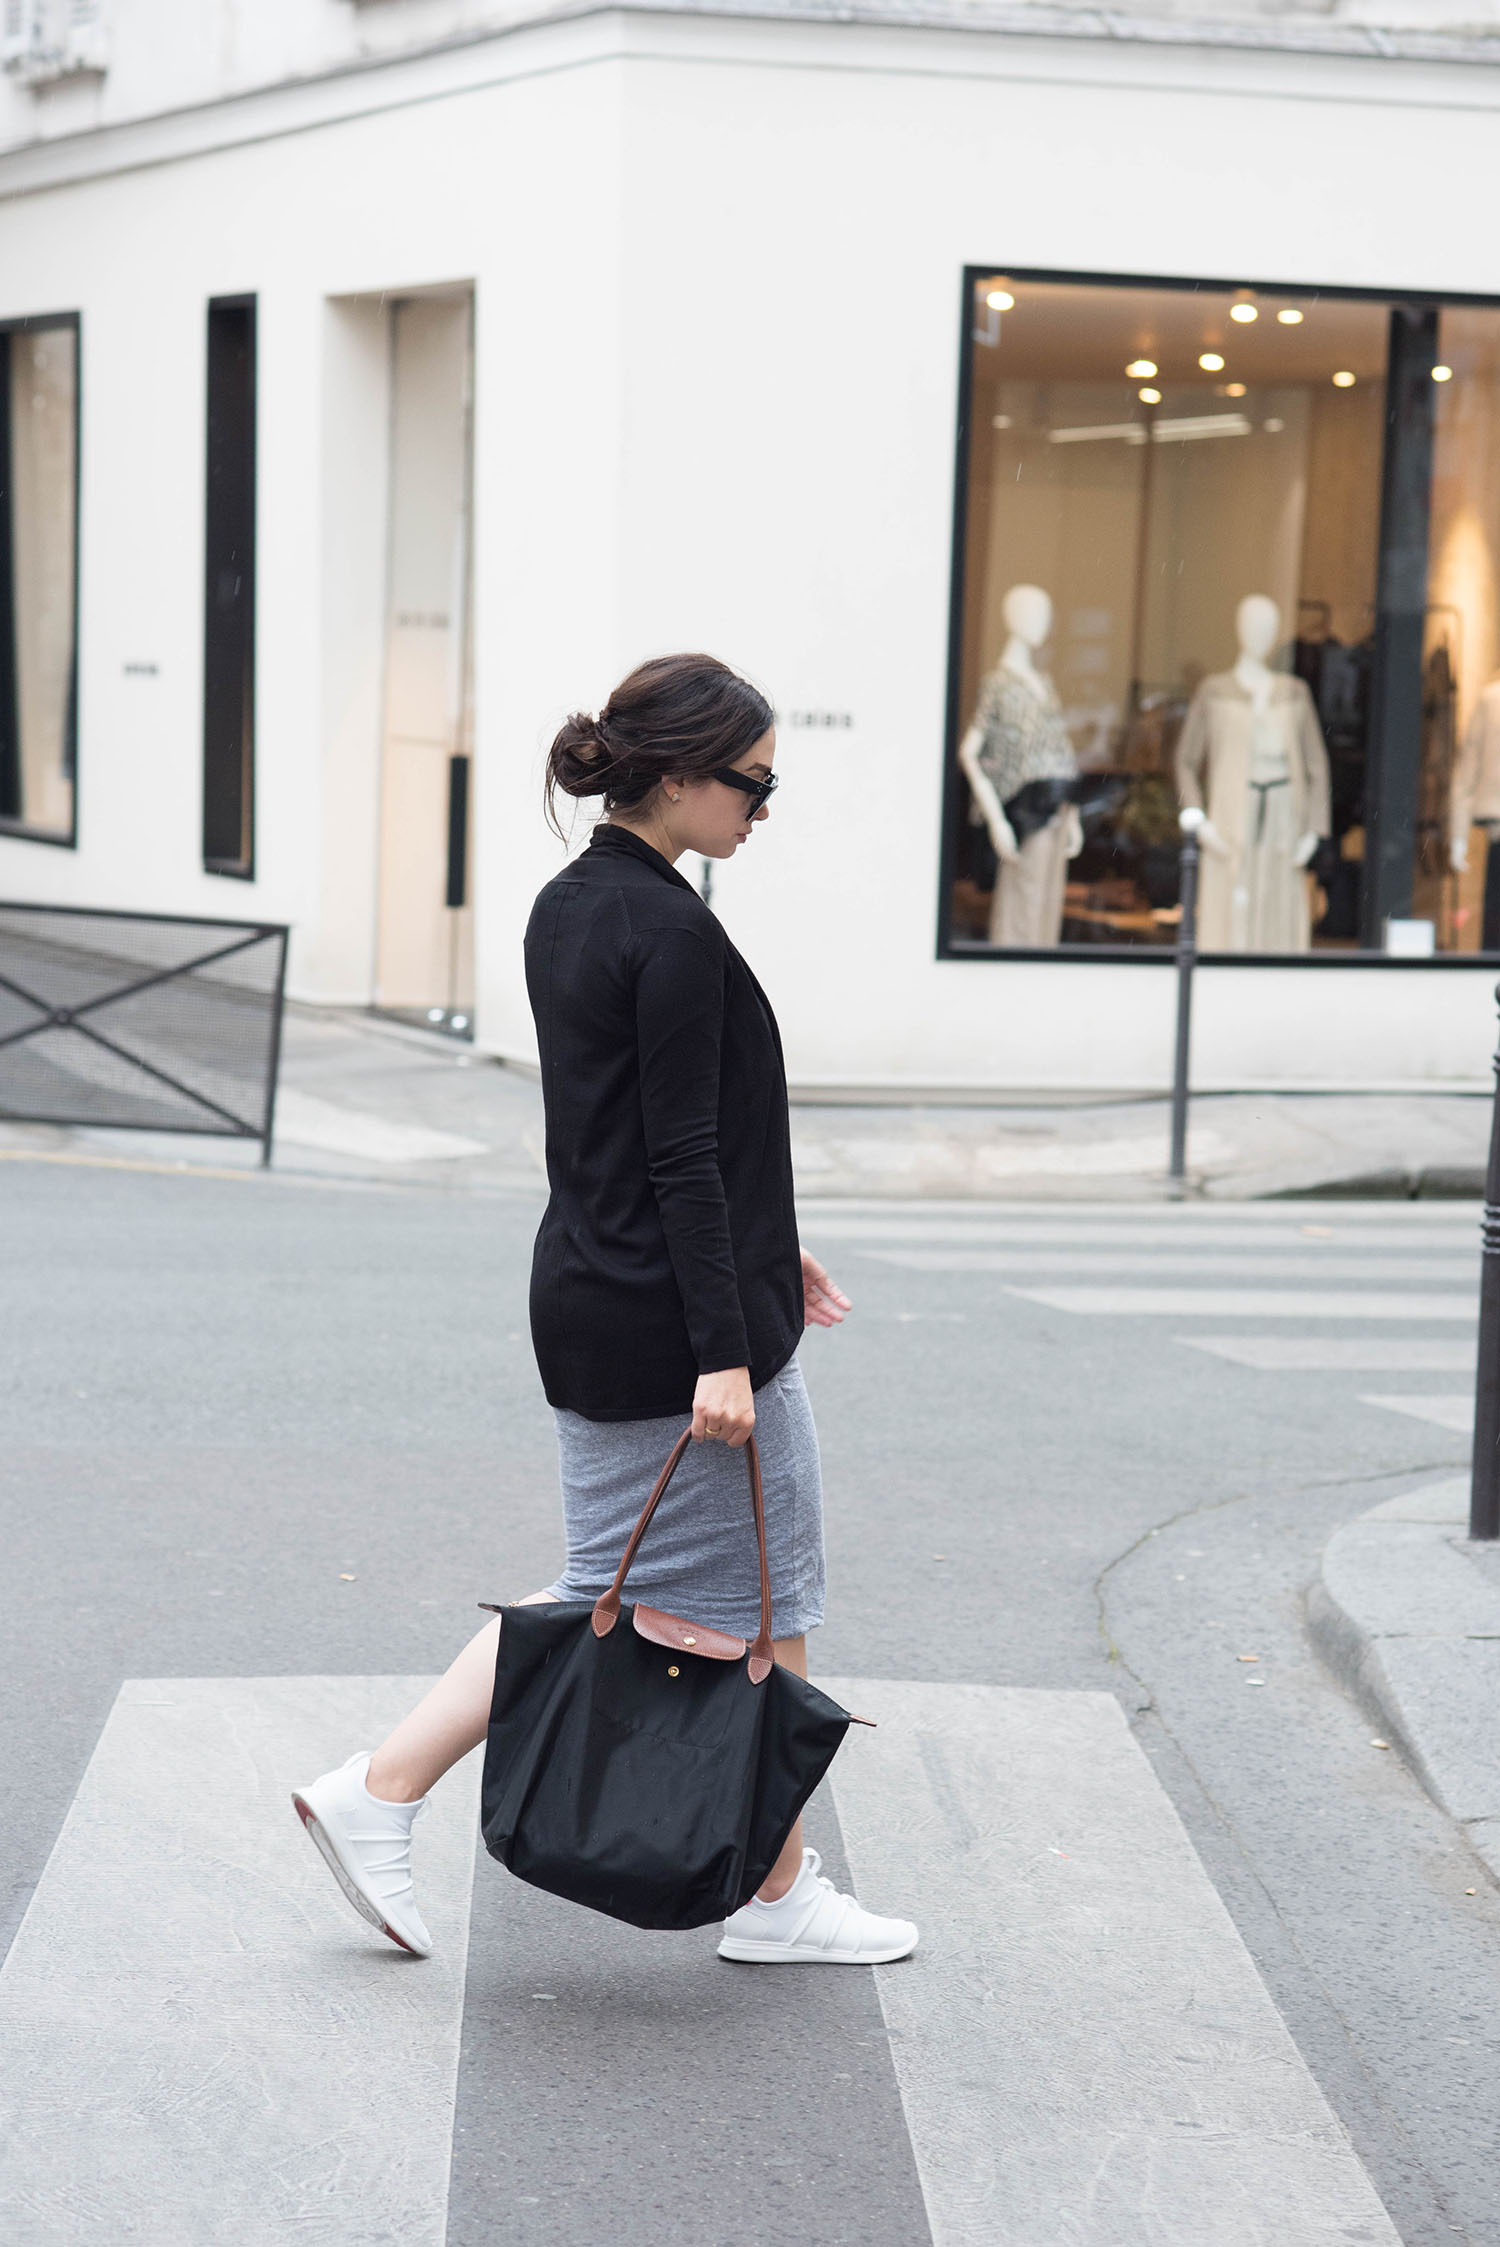 Fashion blogger Cee Fardoe of Coco & Vera walks in Paris wearing Skye Footwear sneakers and a grey Monrow dress